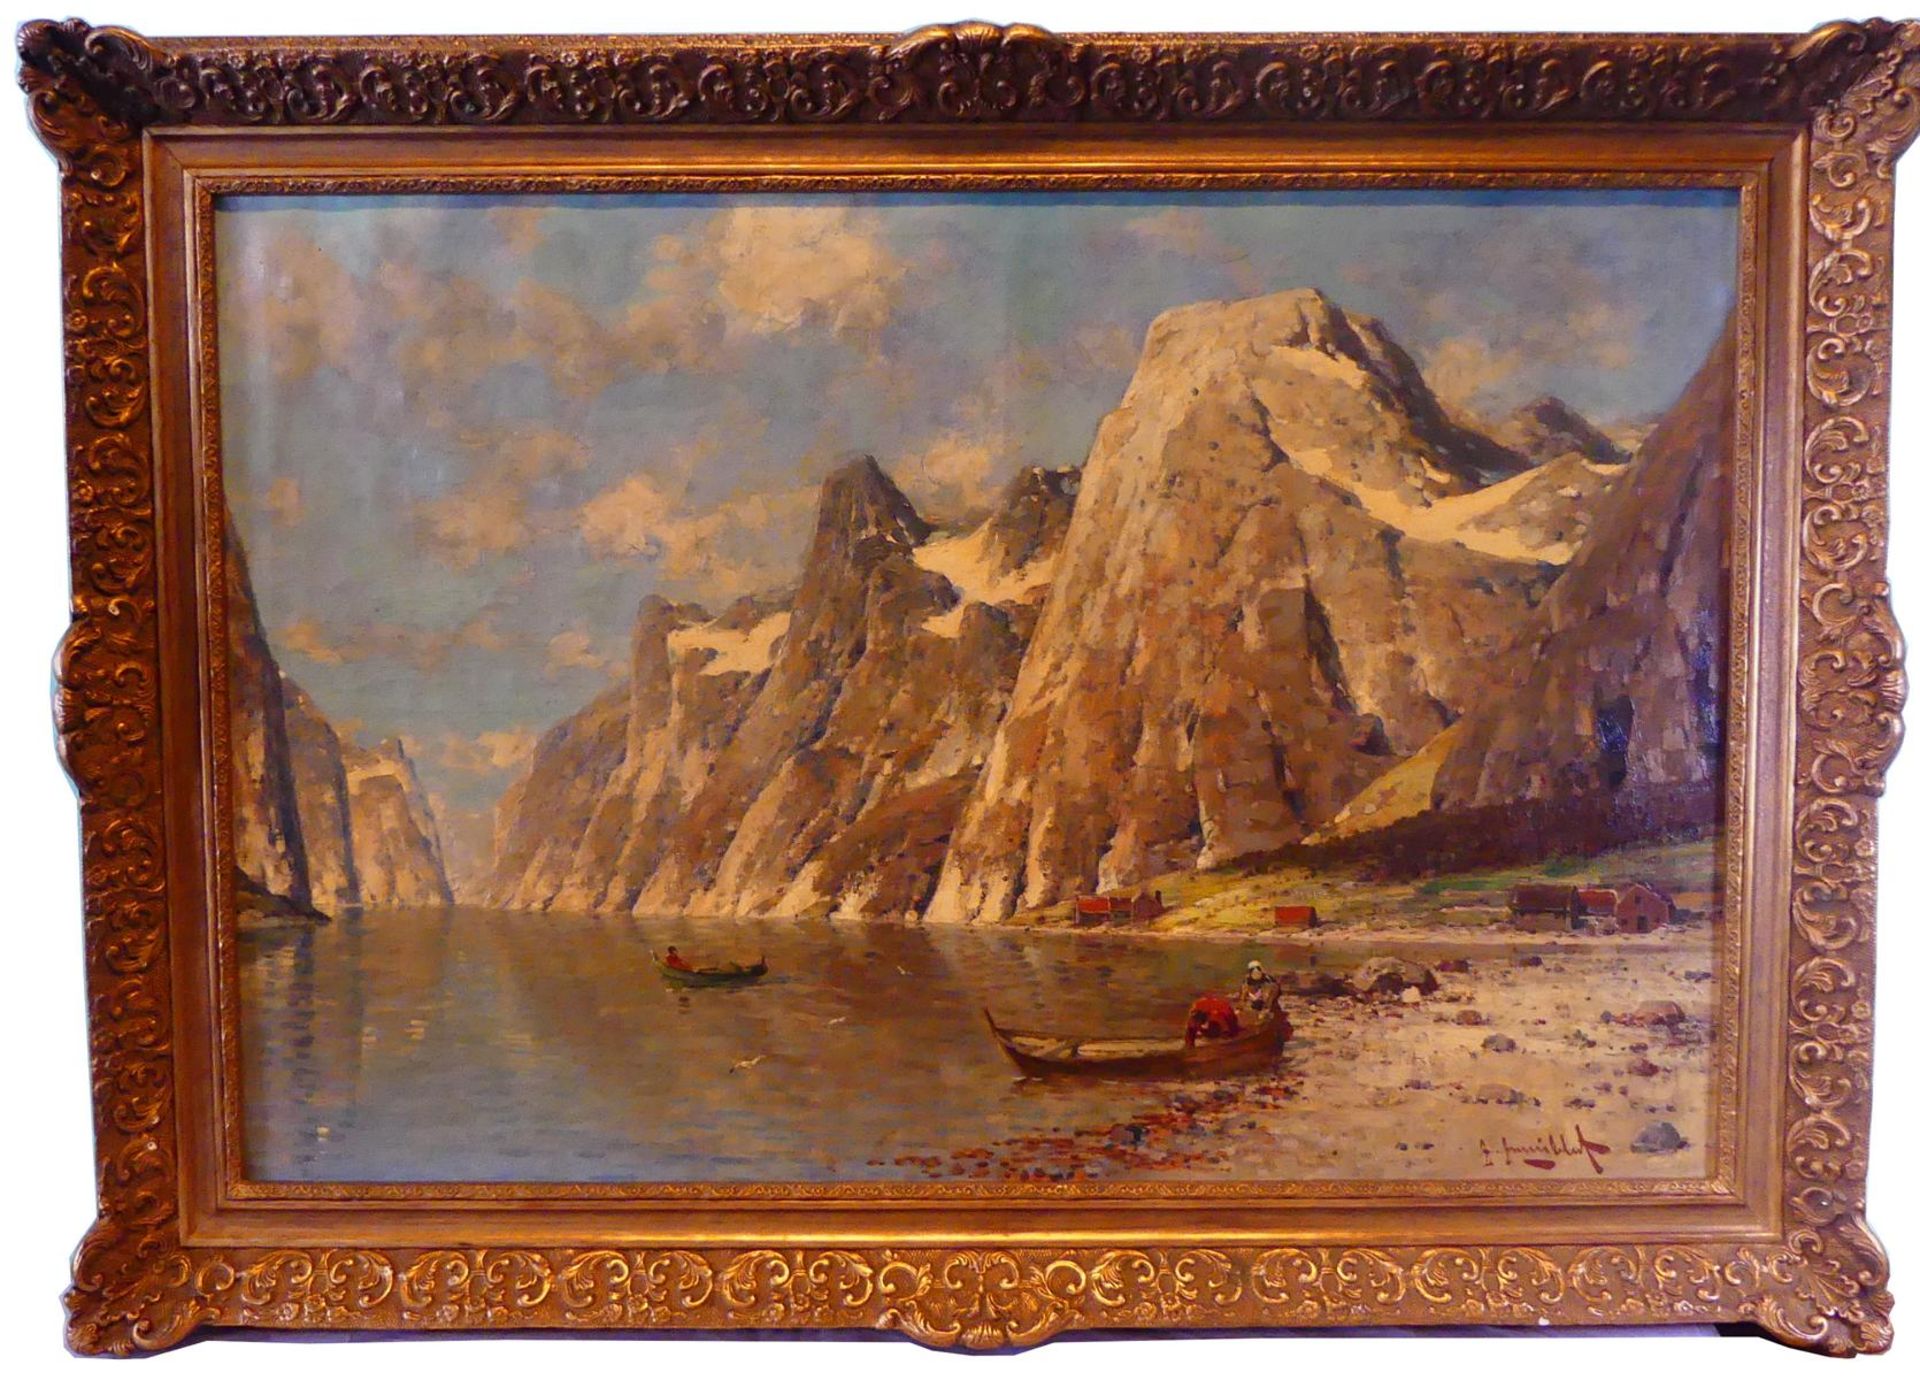 JOHANN JUNGBLUT (1860-1912), "Norwegische Fjordlandschaft", Öl/L,